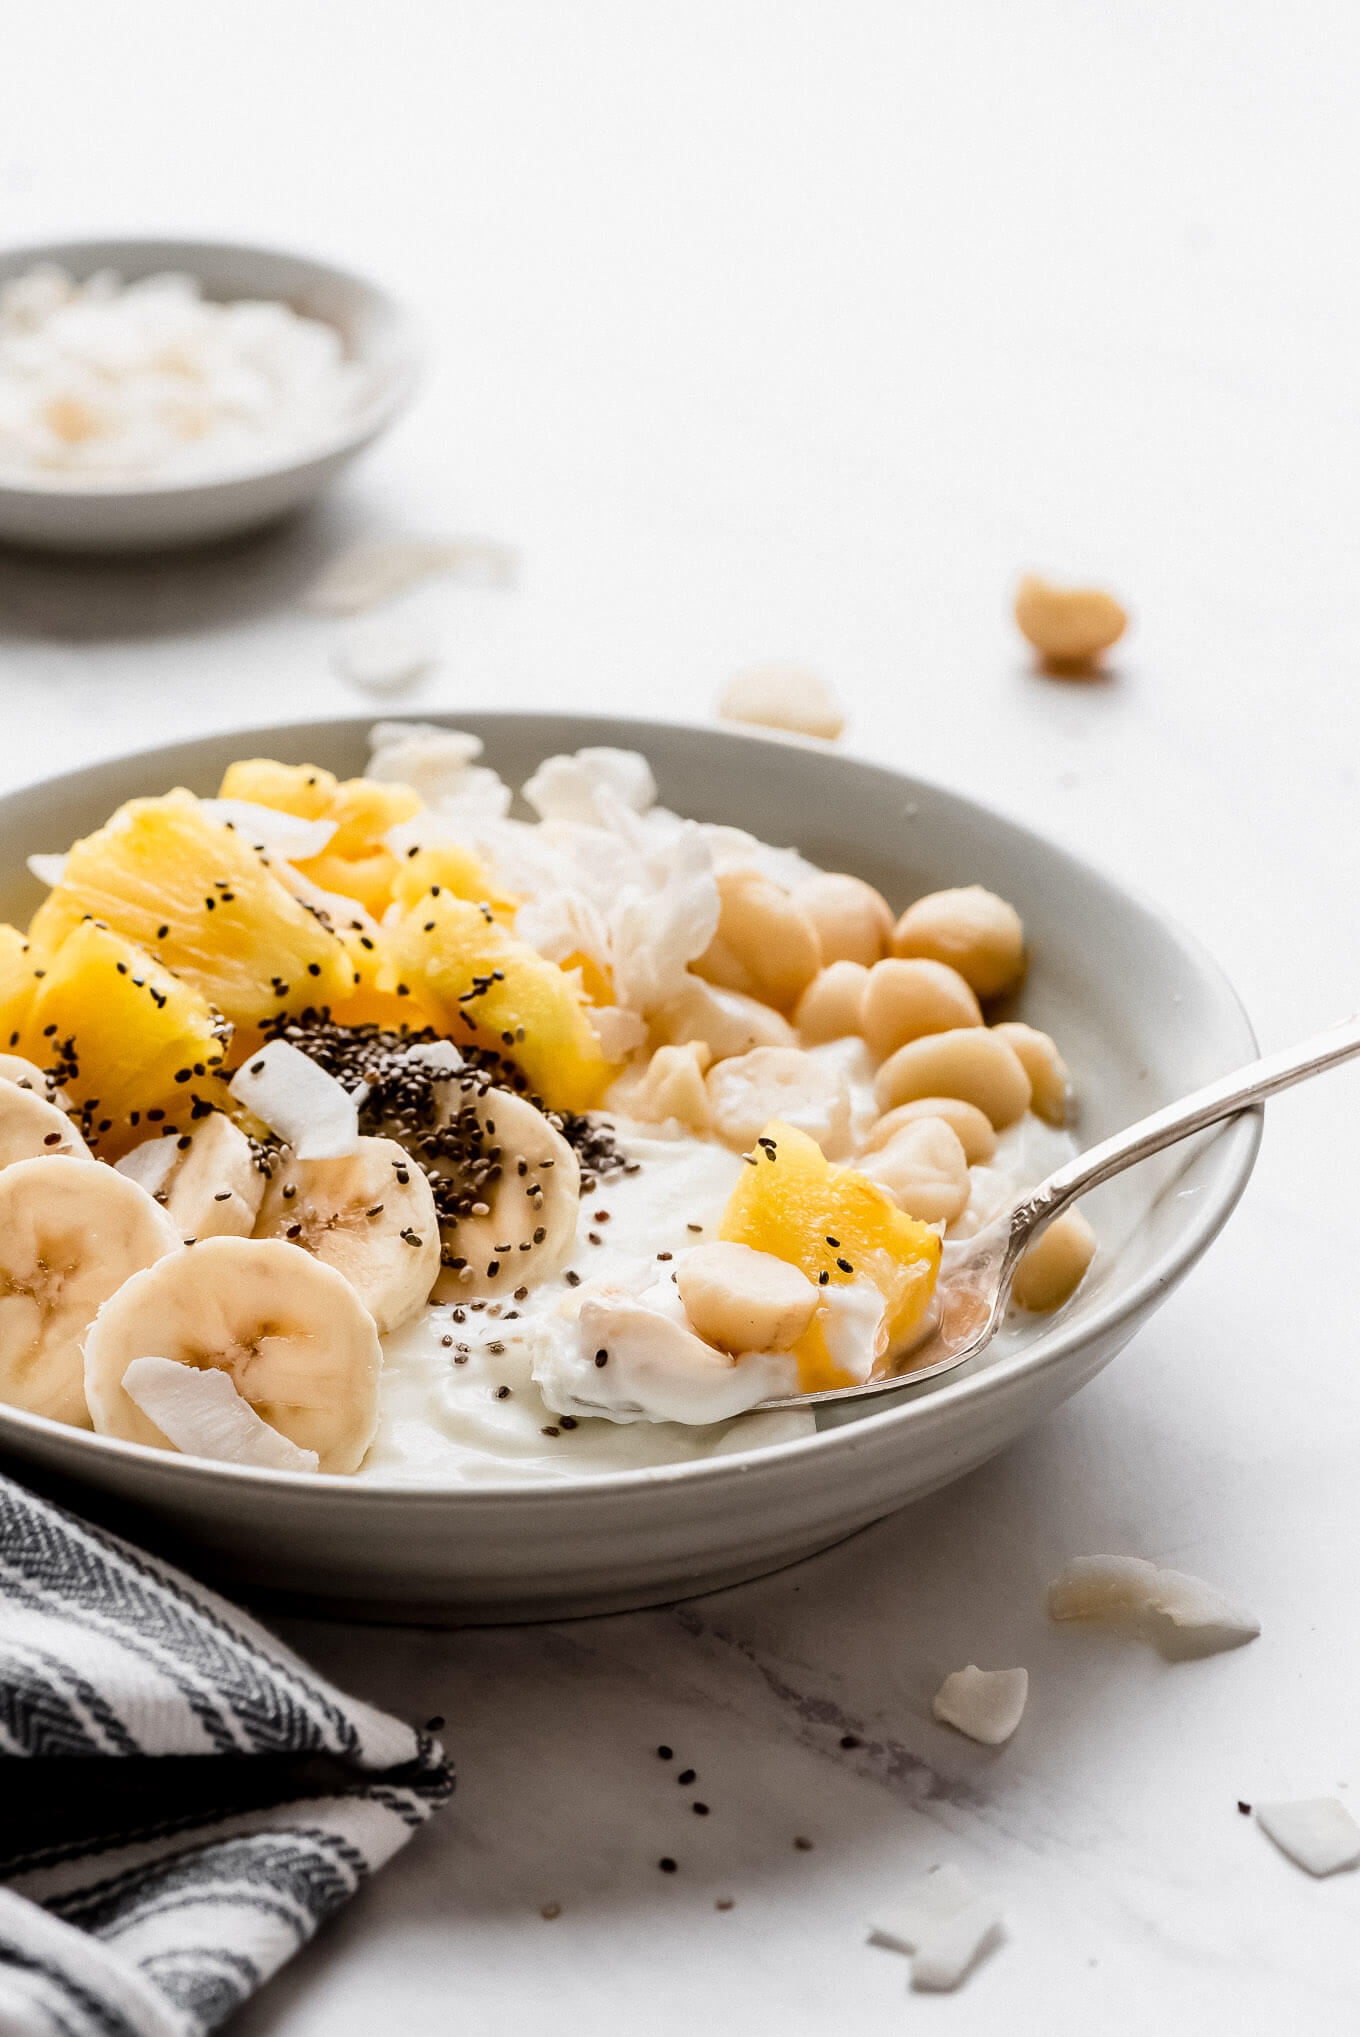 A Greek yogurt bowl topped with bananas, pineapple, chia seeds, coconut flakes, and macadamia nuts.